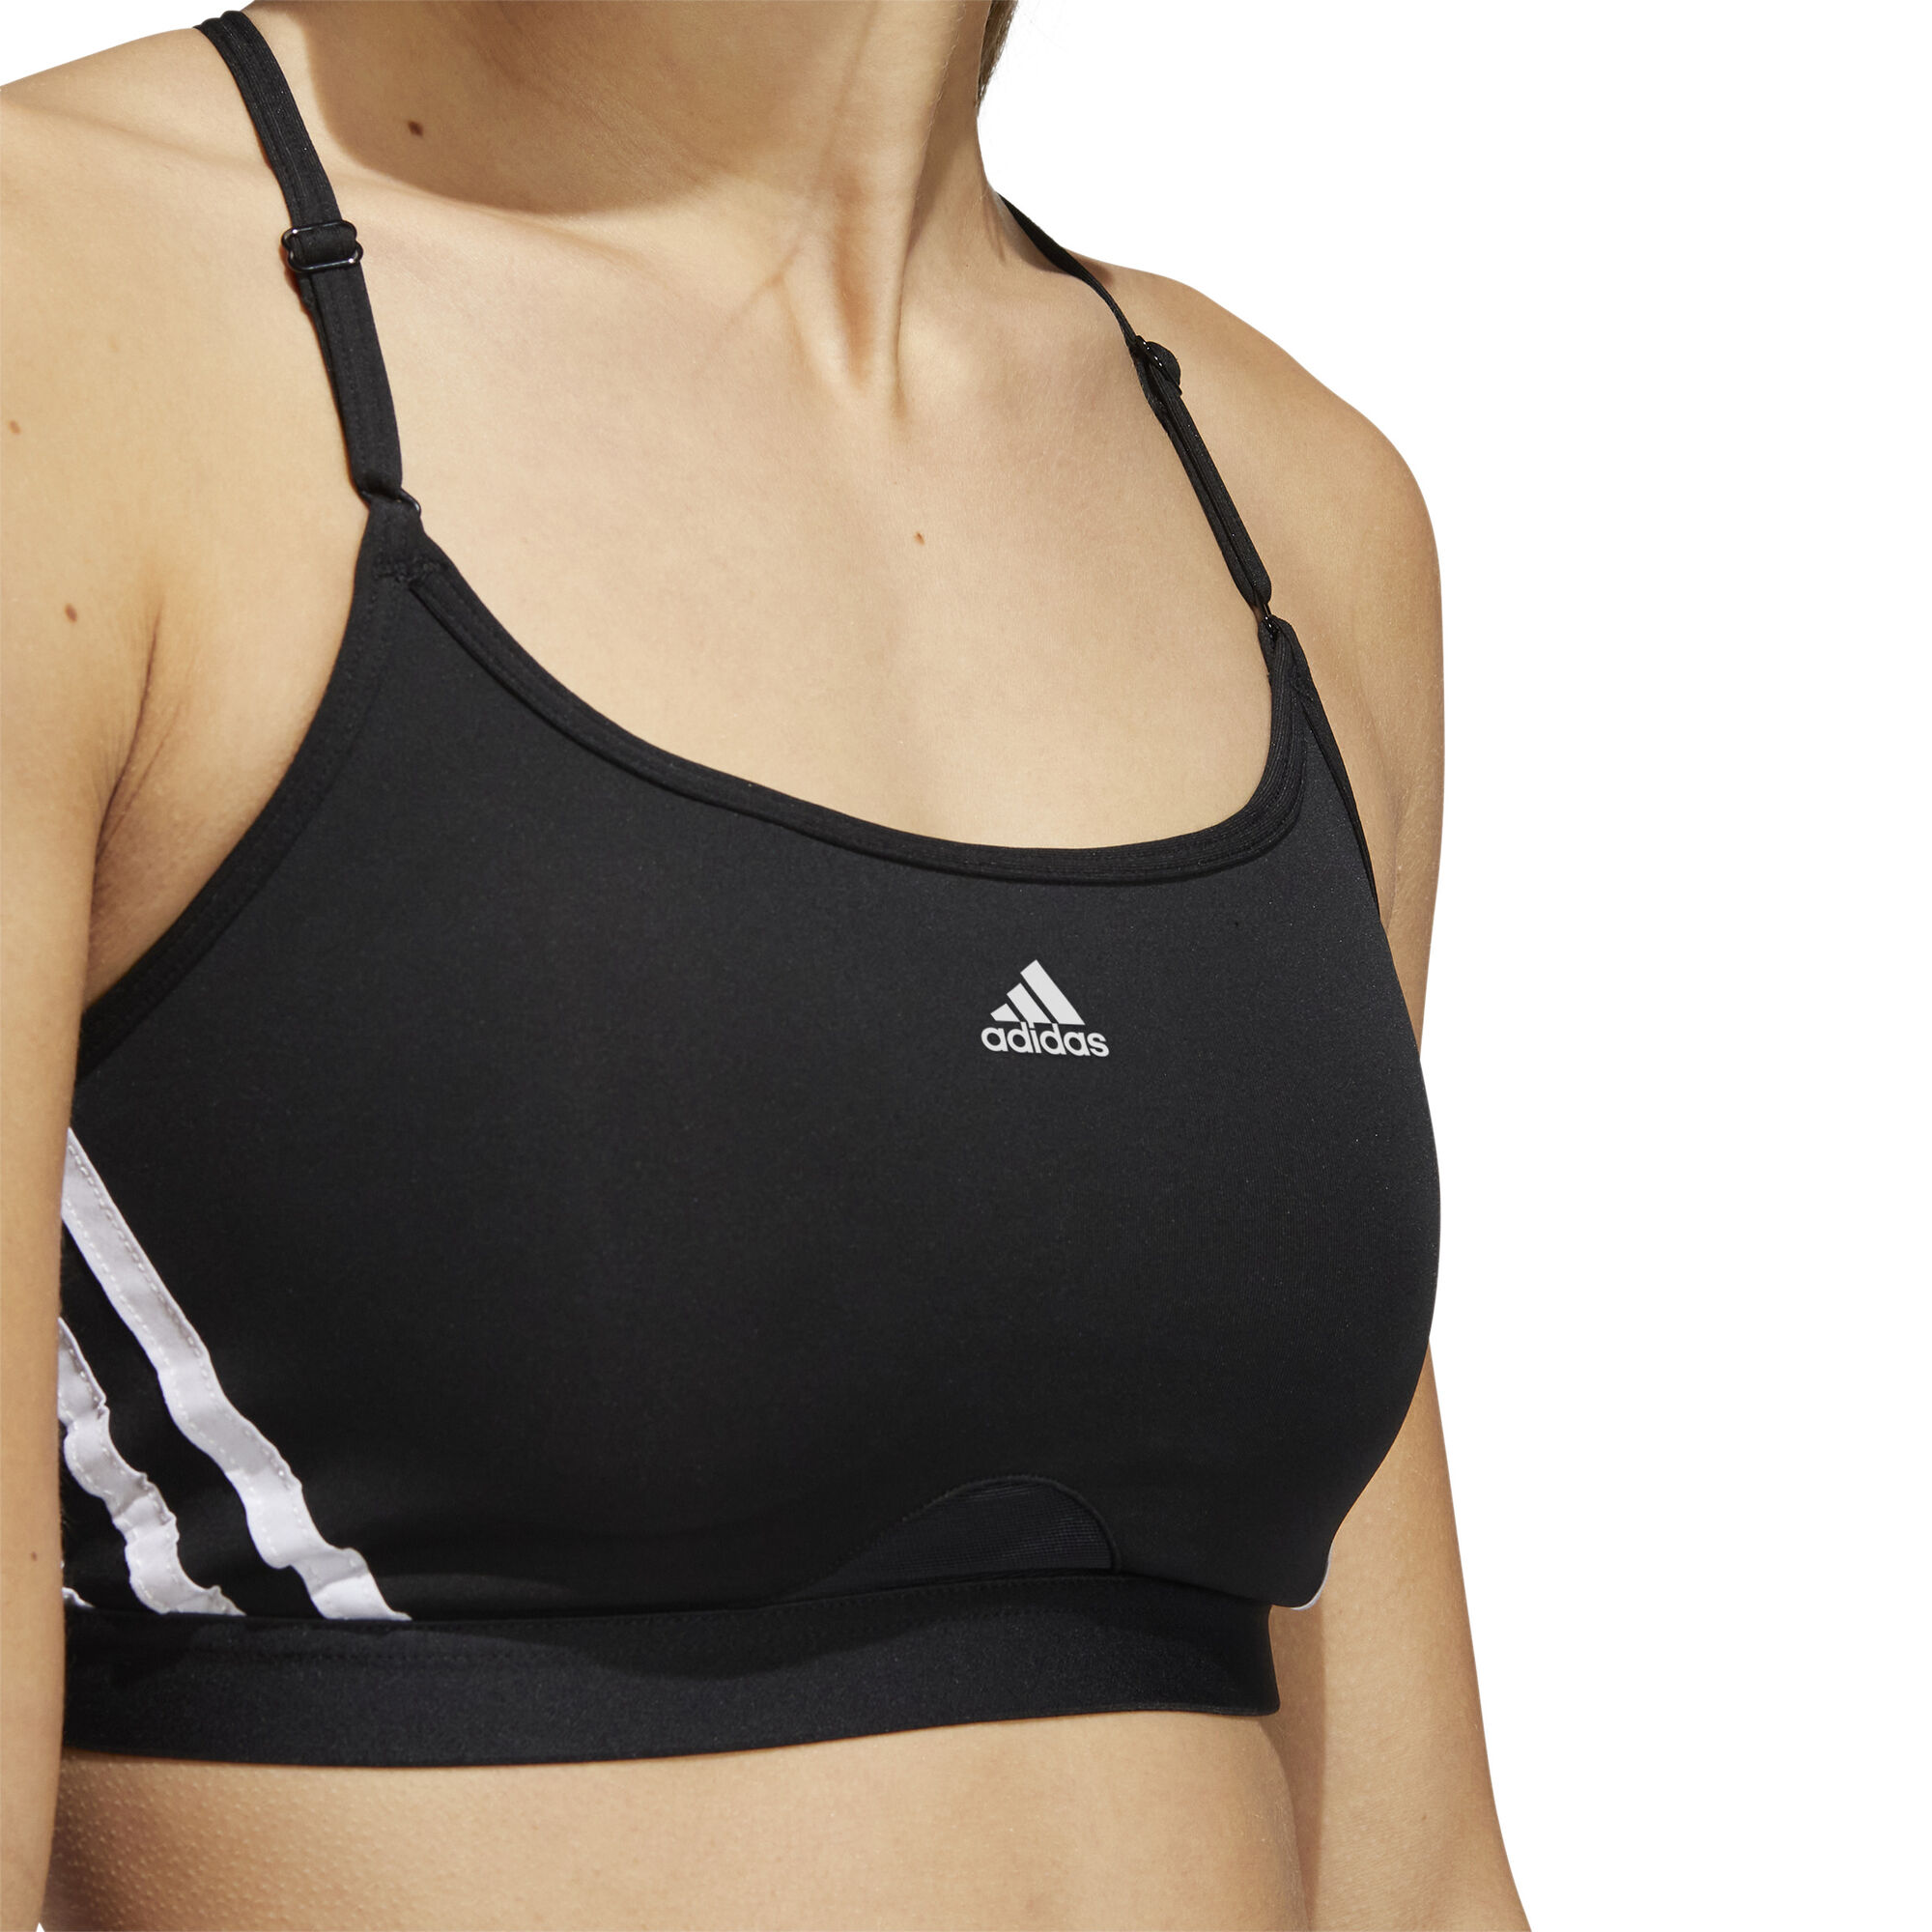 Buy adidas Aeroreact Low-Support 3 Stripes Sports Bras Women Black online